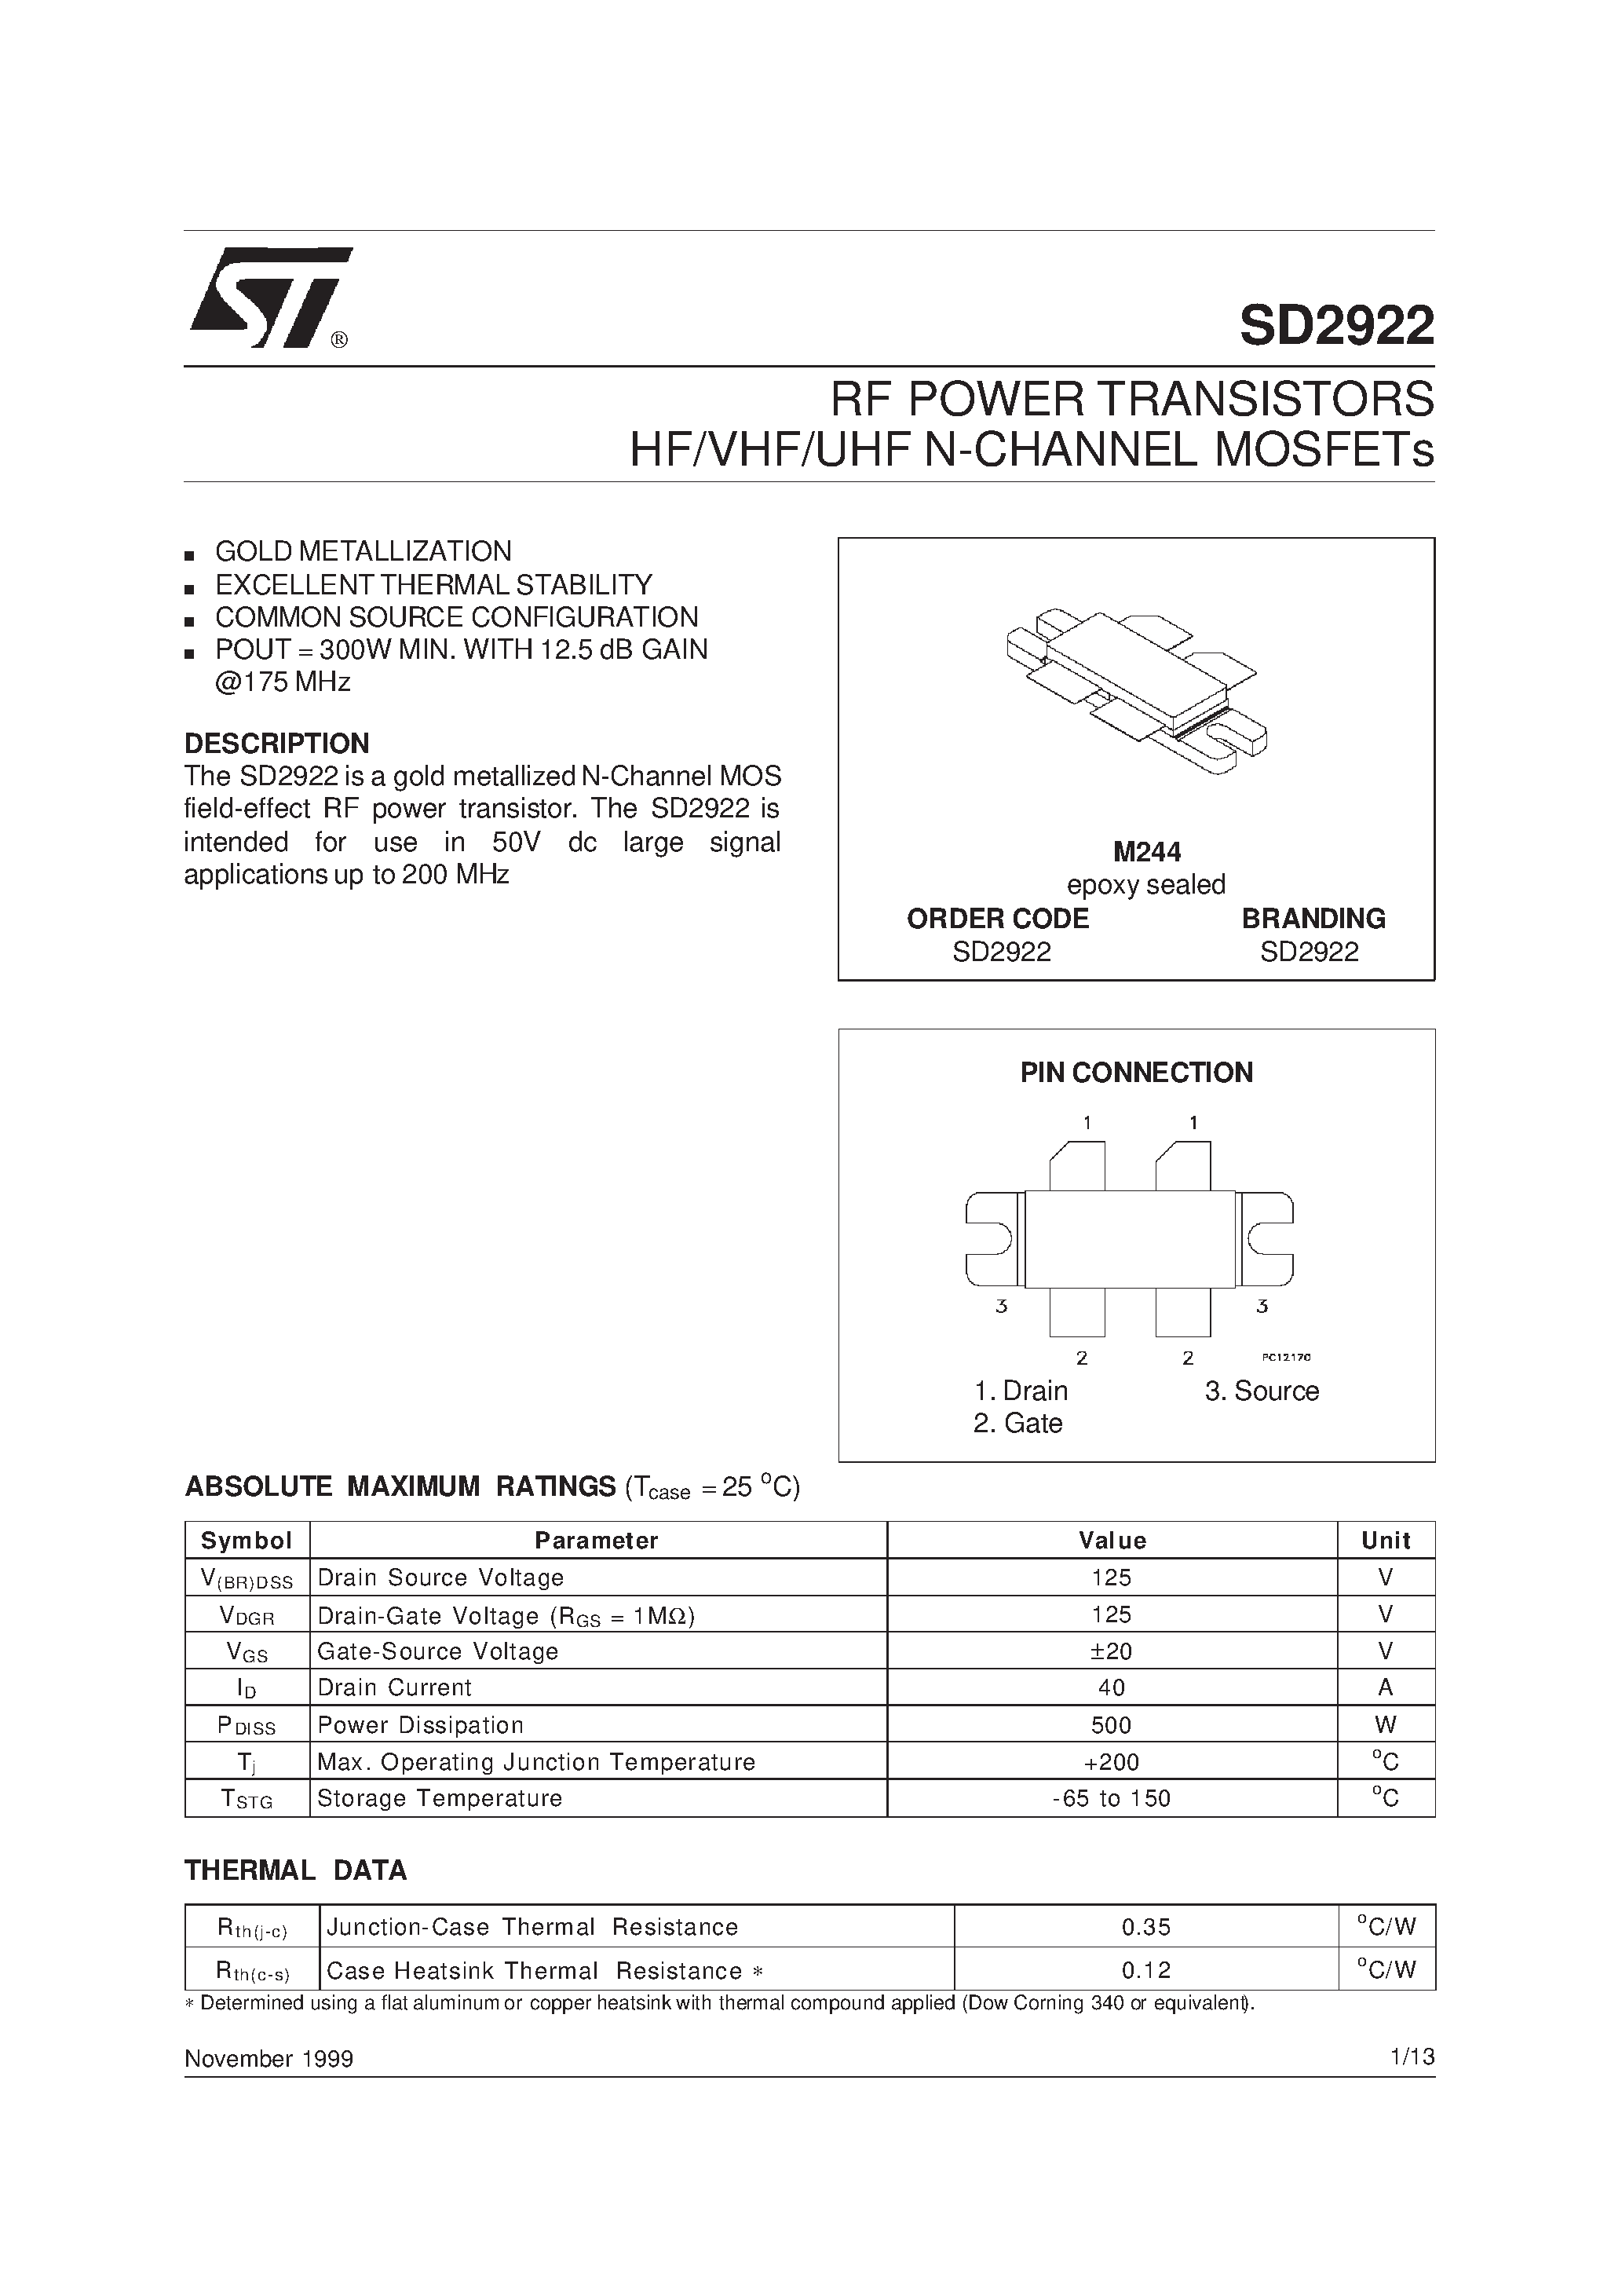 Datasheet SD2922 - RF POWER TRANSISTORS HF/VHF/UHF N-CHANNEL MOSFETs page 1